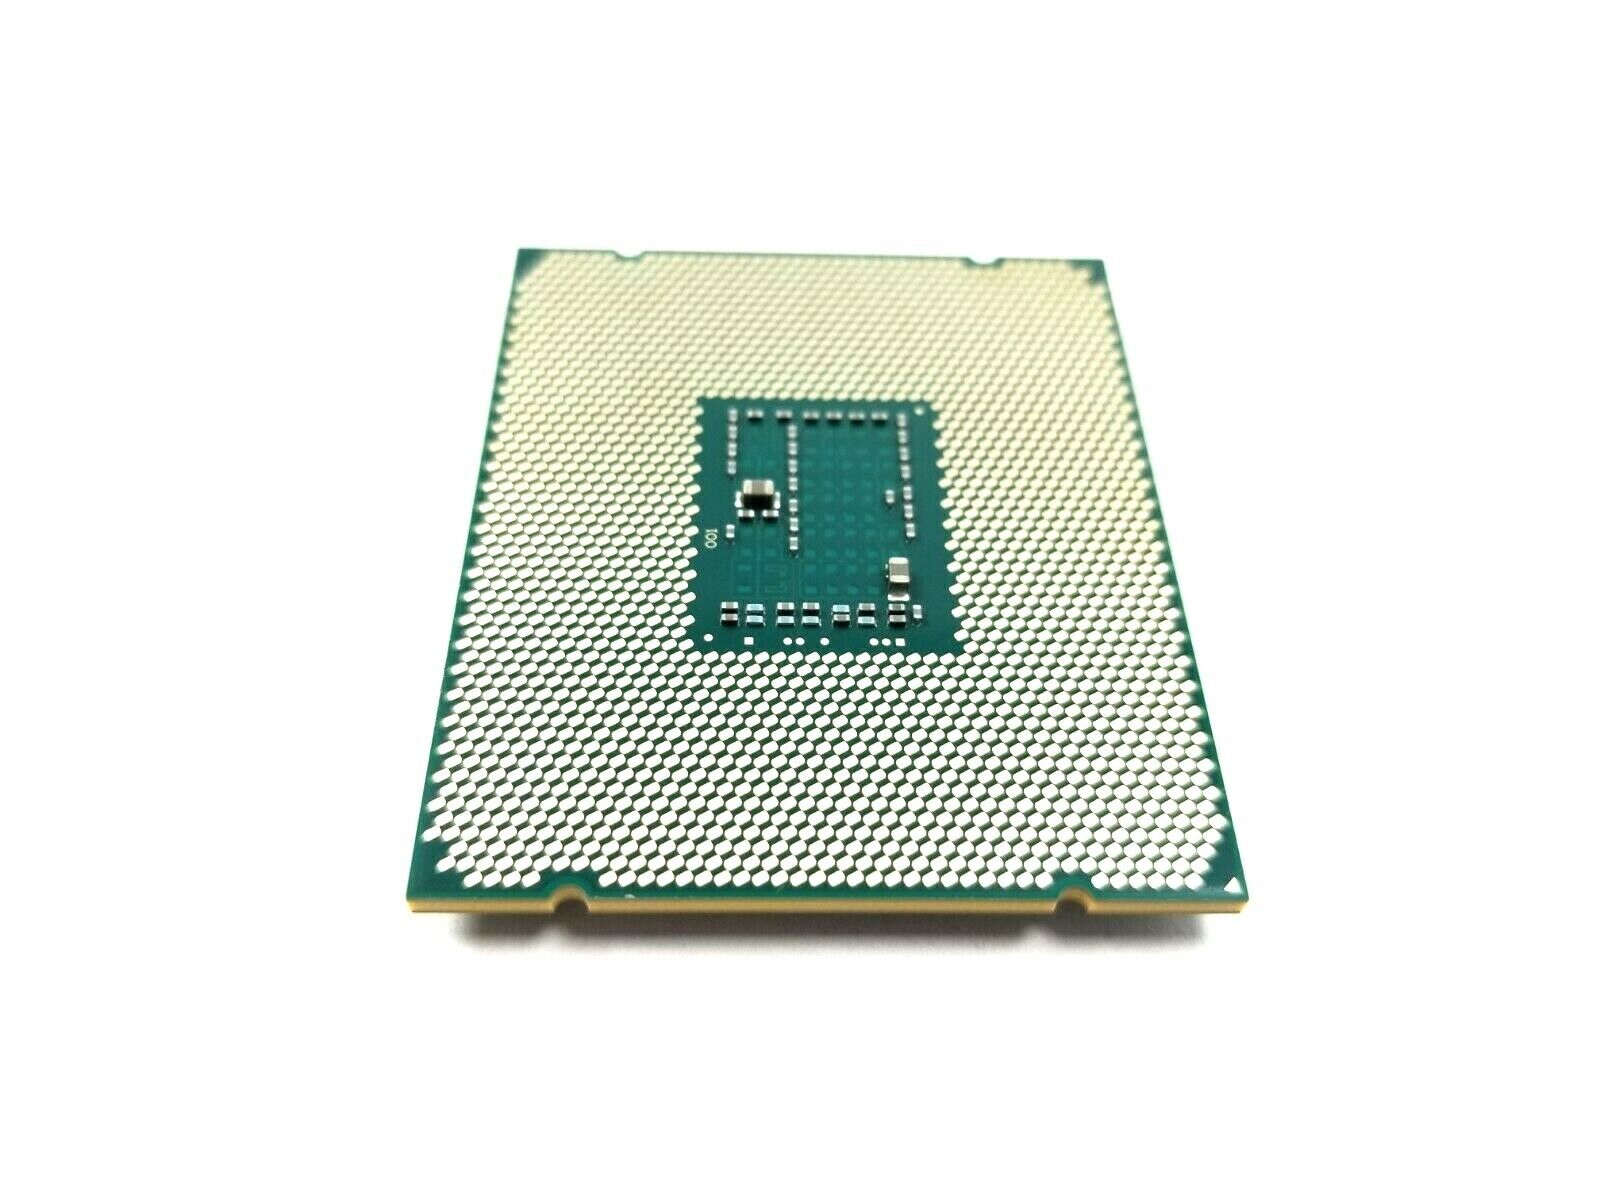 Intel Xeon E5-2609V3 SR1YC 1.90GHz 6-Core LGA2011-3 Server CPU Processor